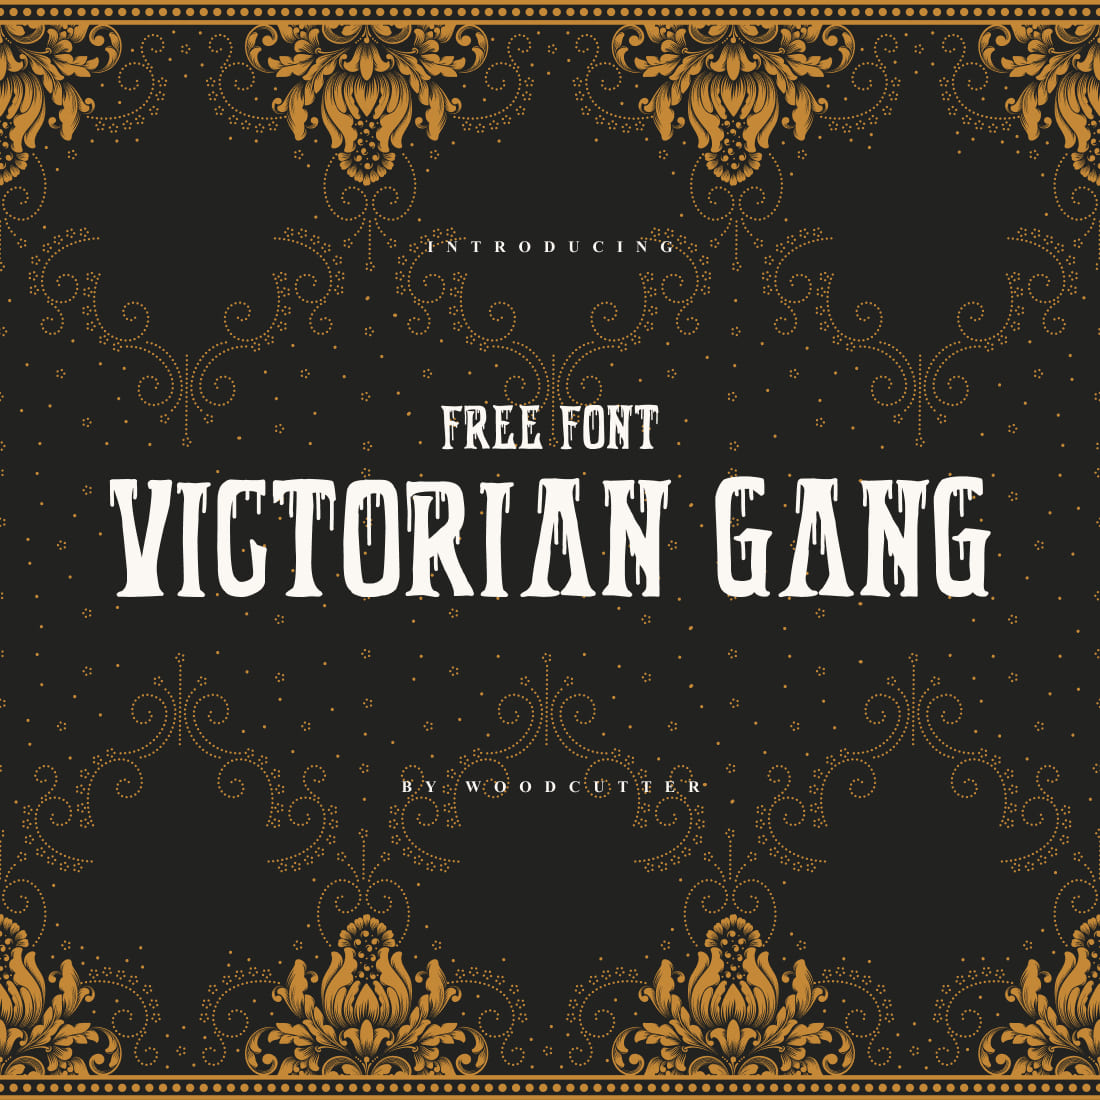 Gorgeous Victorian Gang Free Font MasterBundles Main Cover.